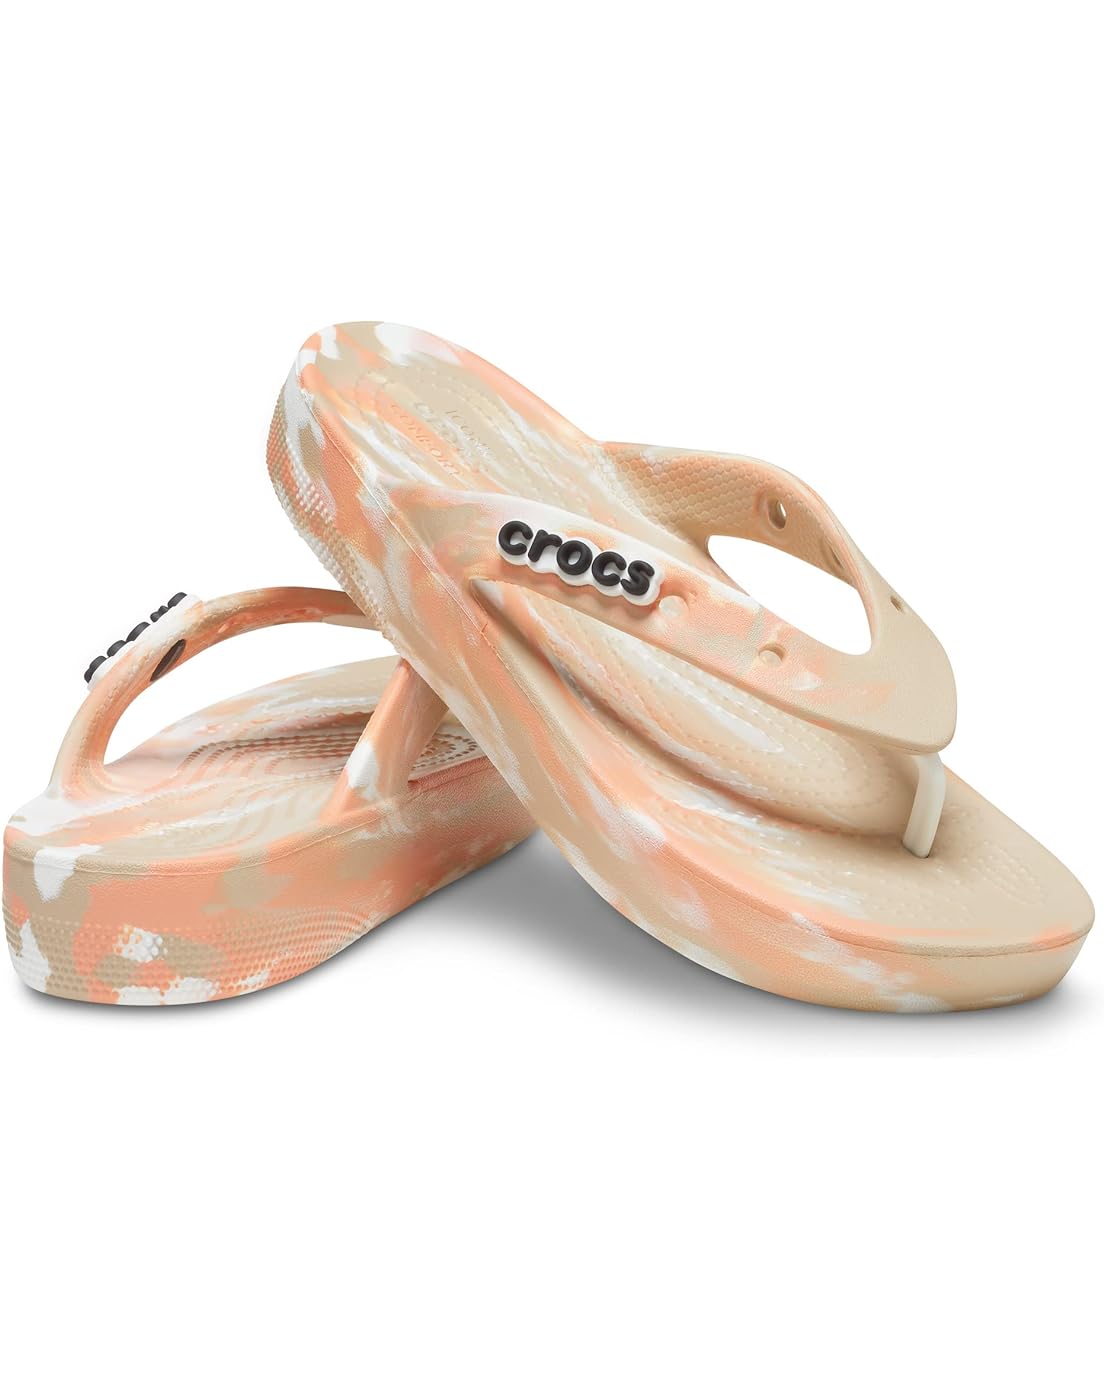 Crocs Classic Platform Flip-Flop